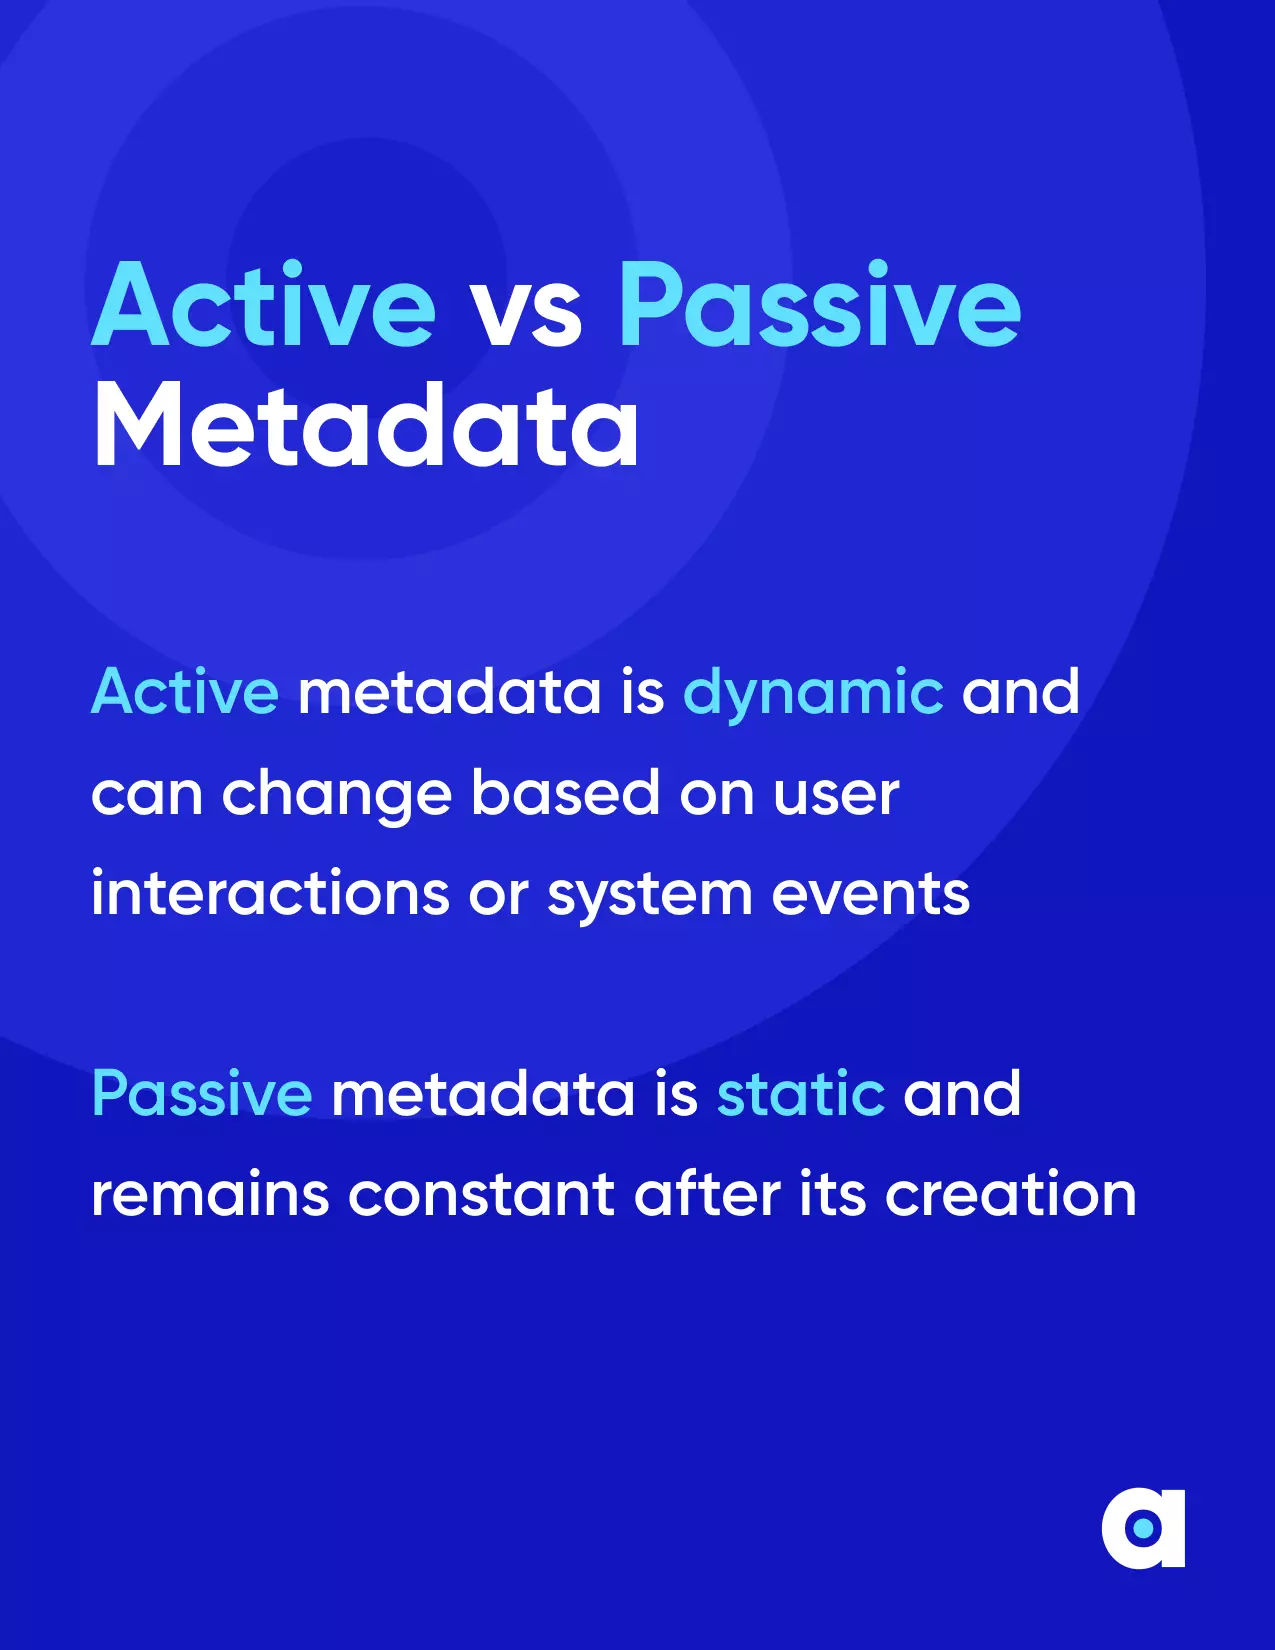 Active vs. Passive Metadata